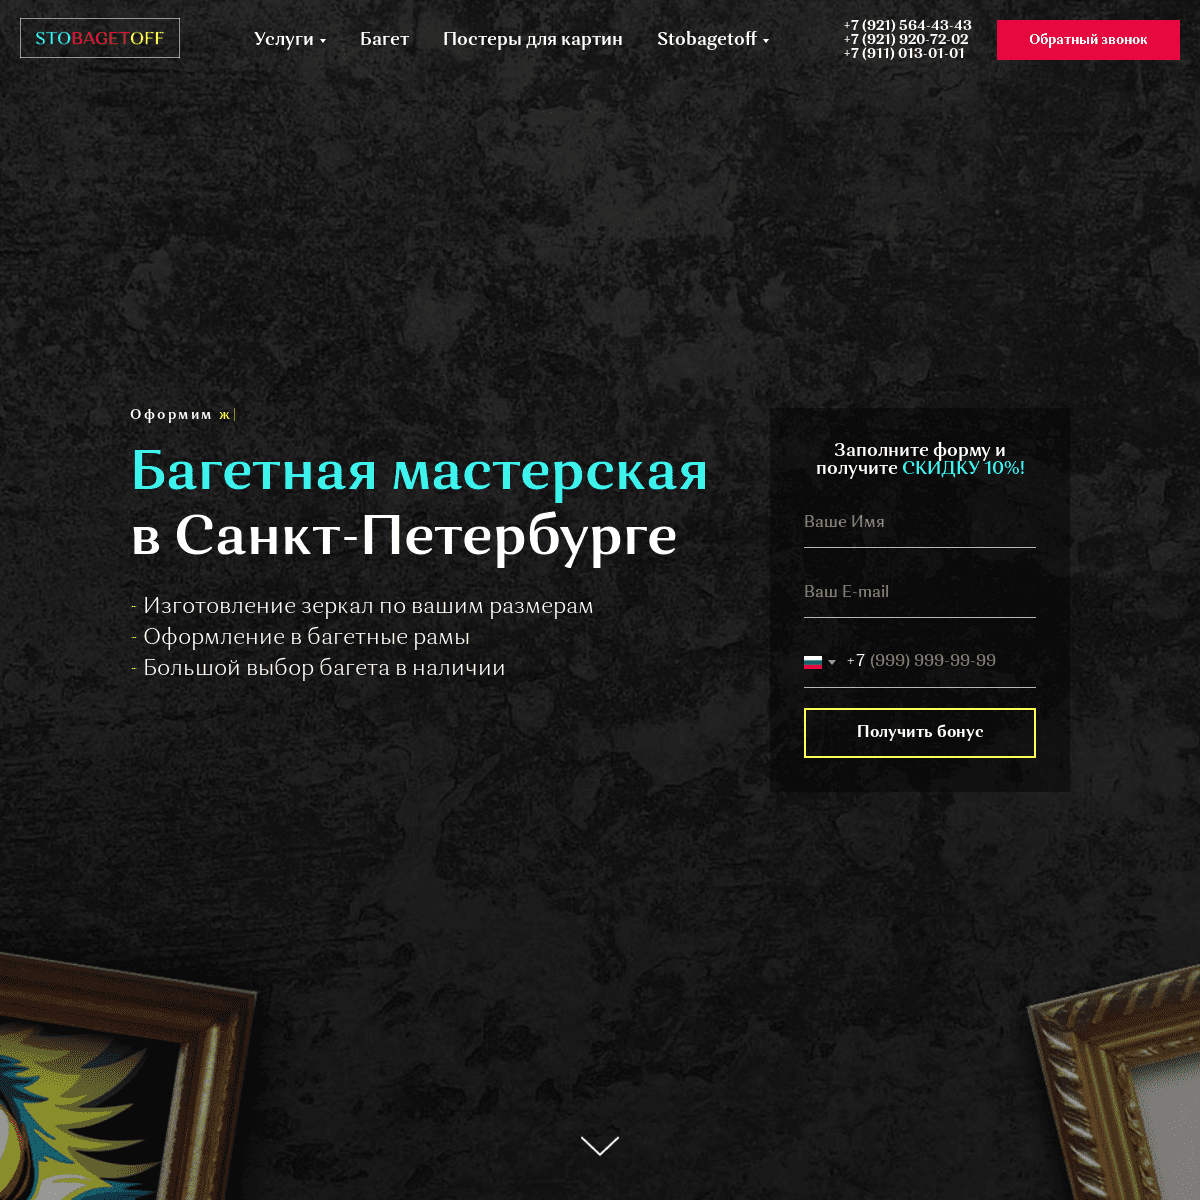 A complete backup of https://stobagetoff.ru